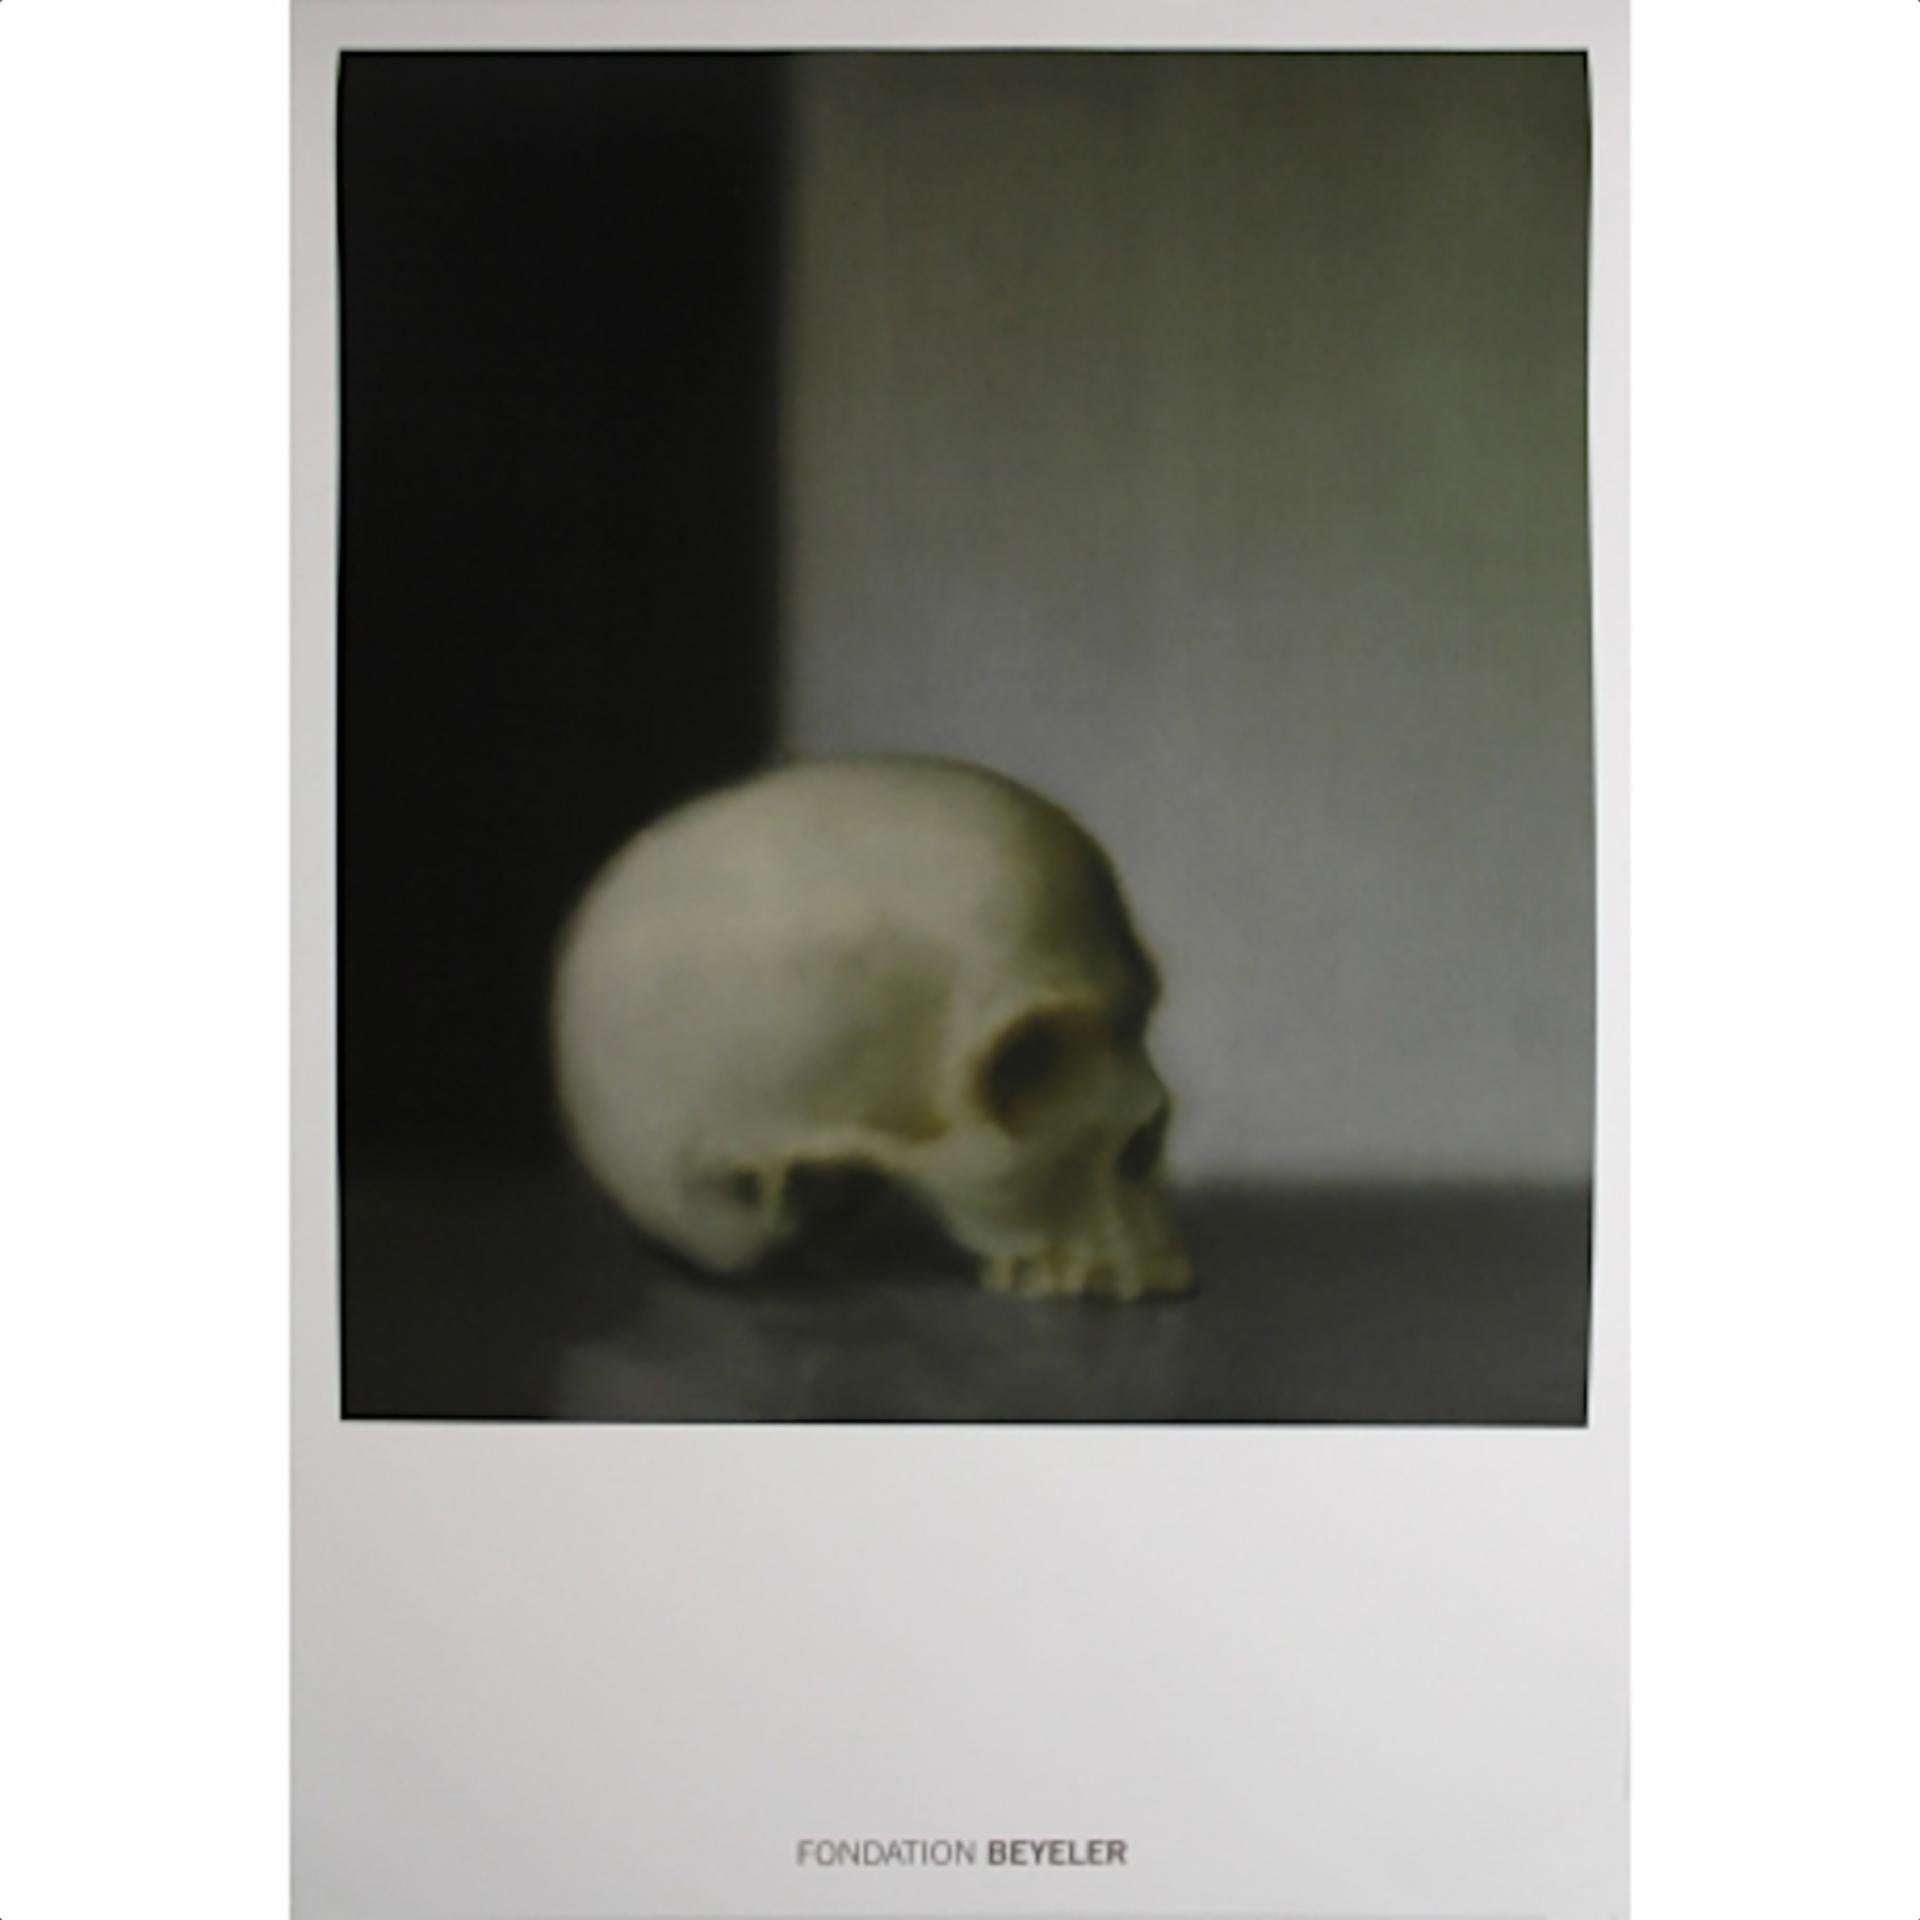 Gerhard Richter - "Skull" - unique color offset lithography